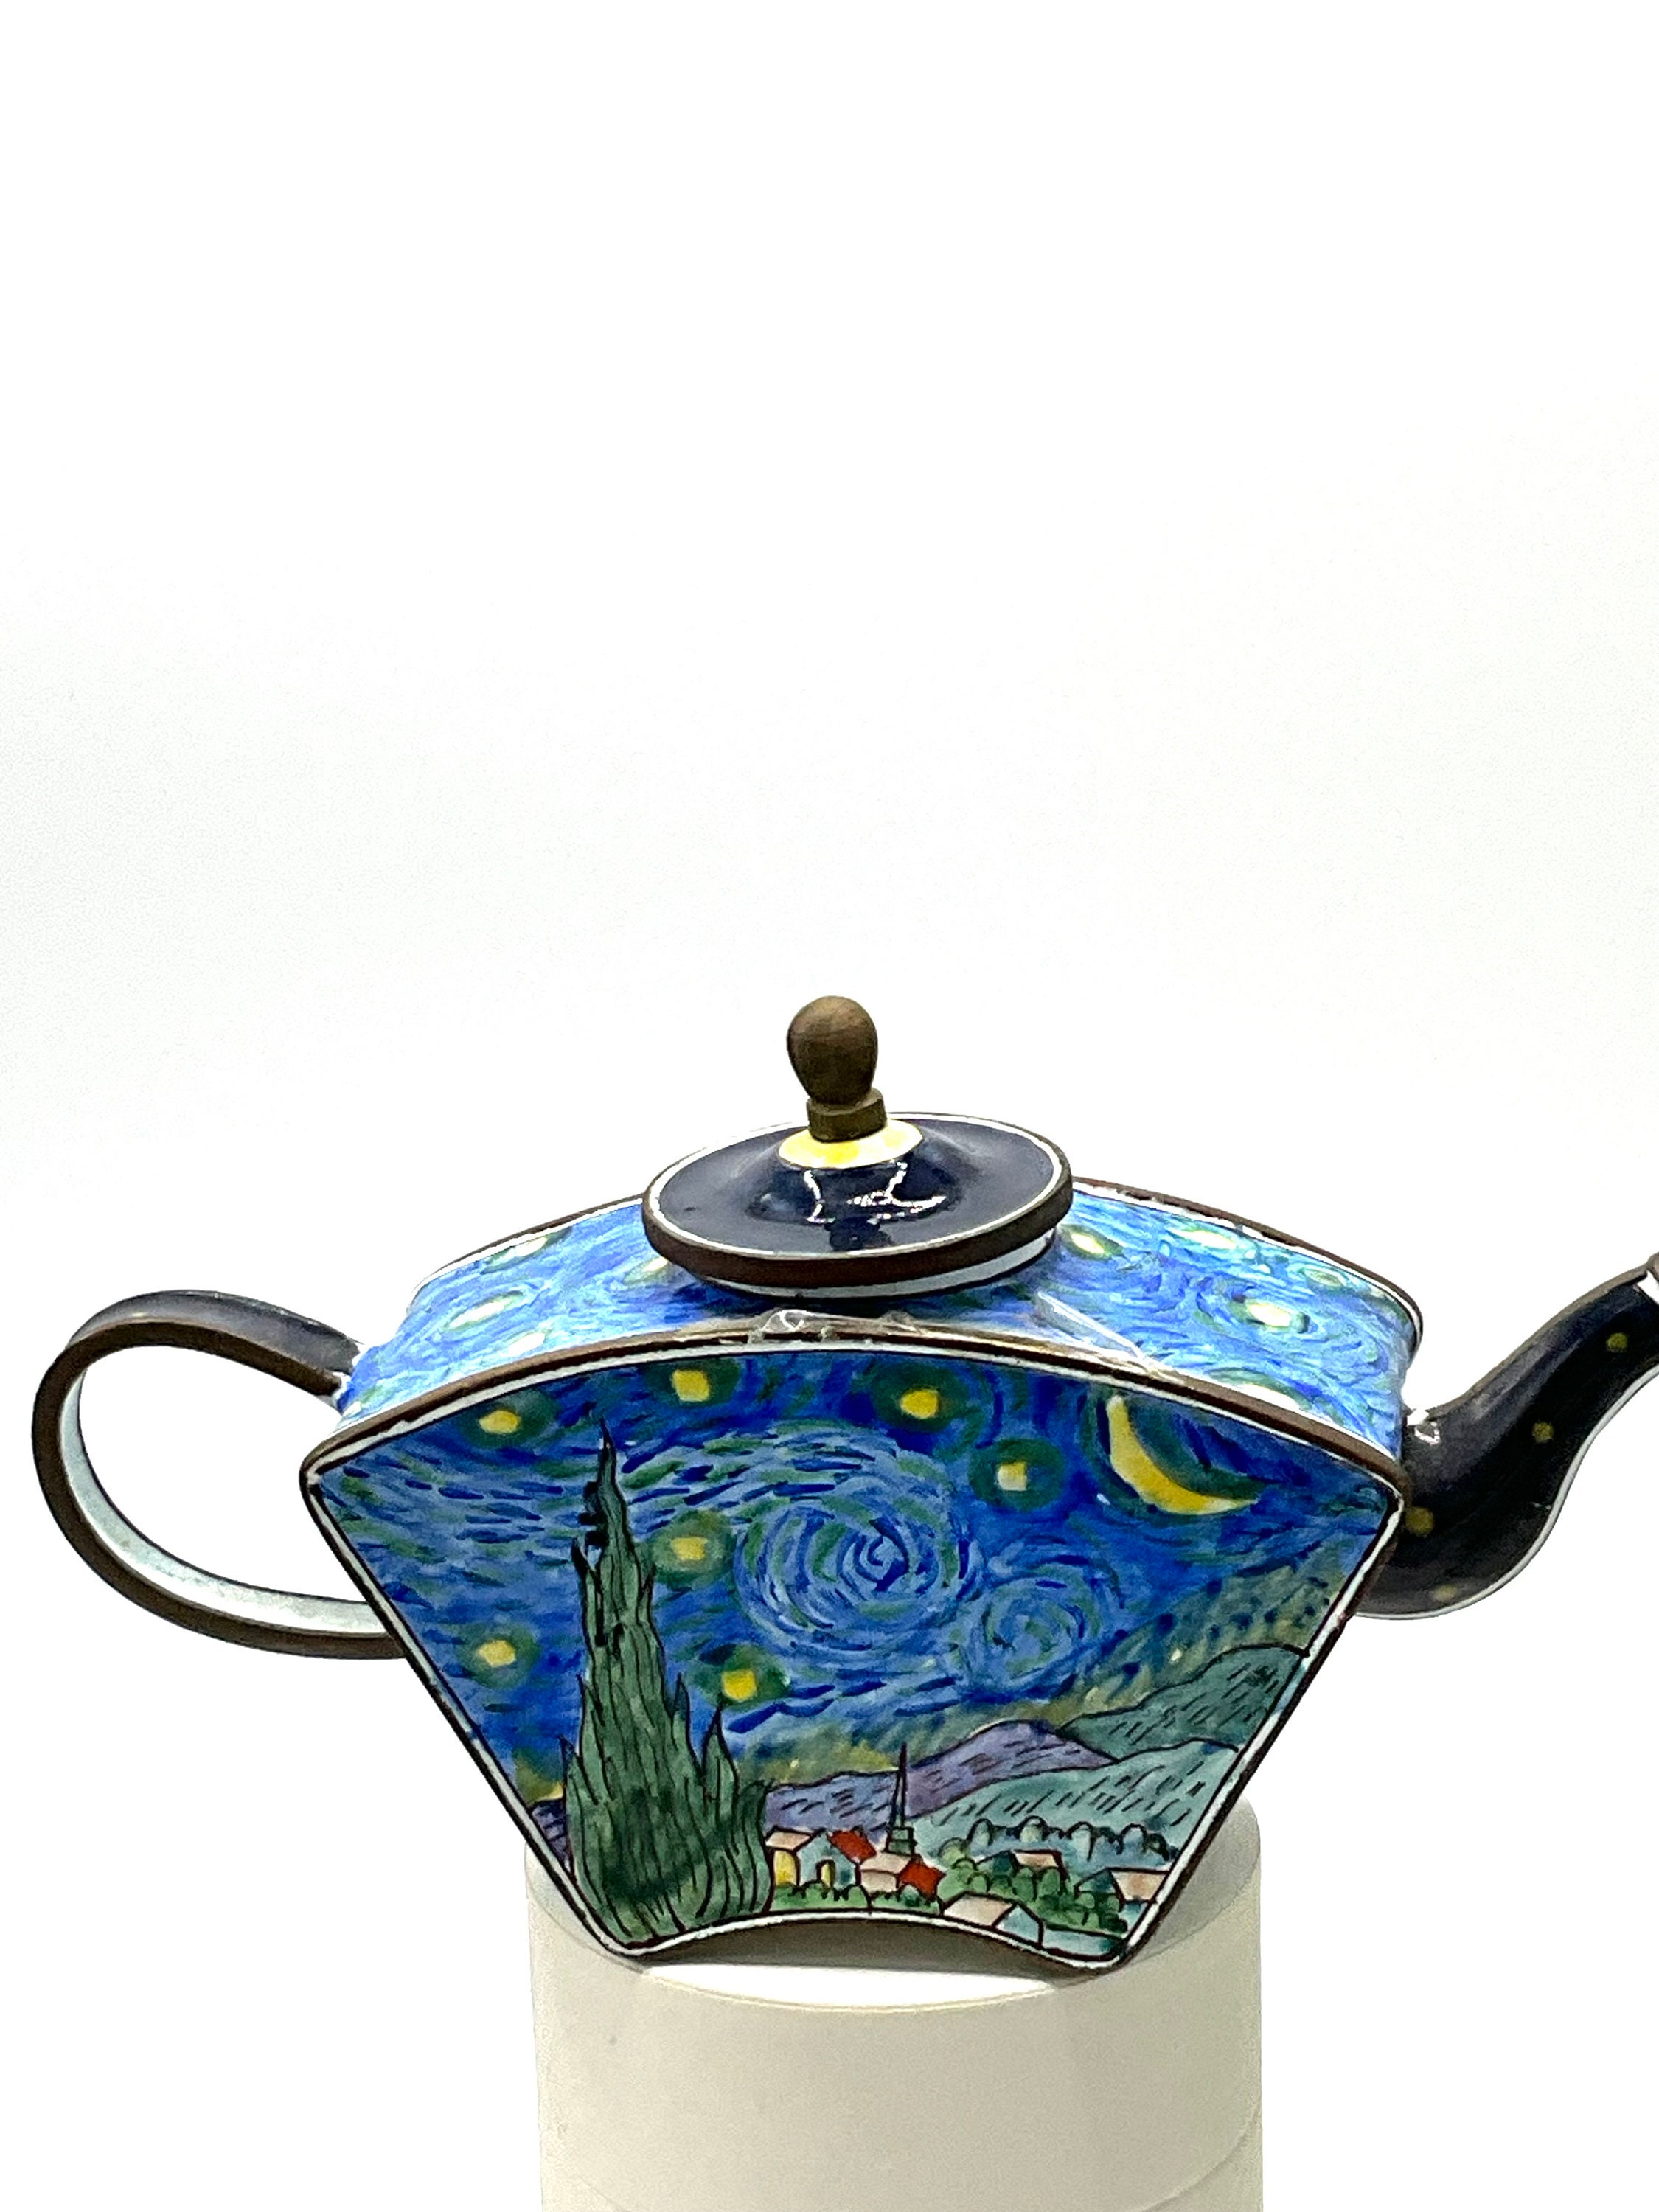 Vincent Van Gogh Collection Brooch Magnet - Shop chana.pottery